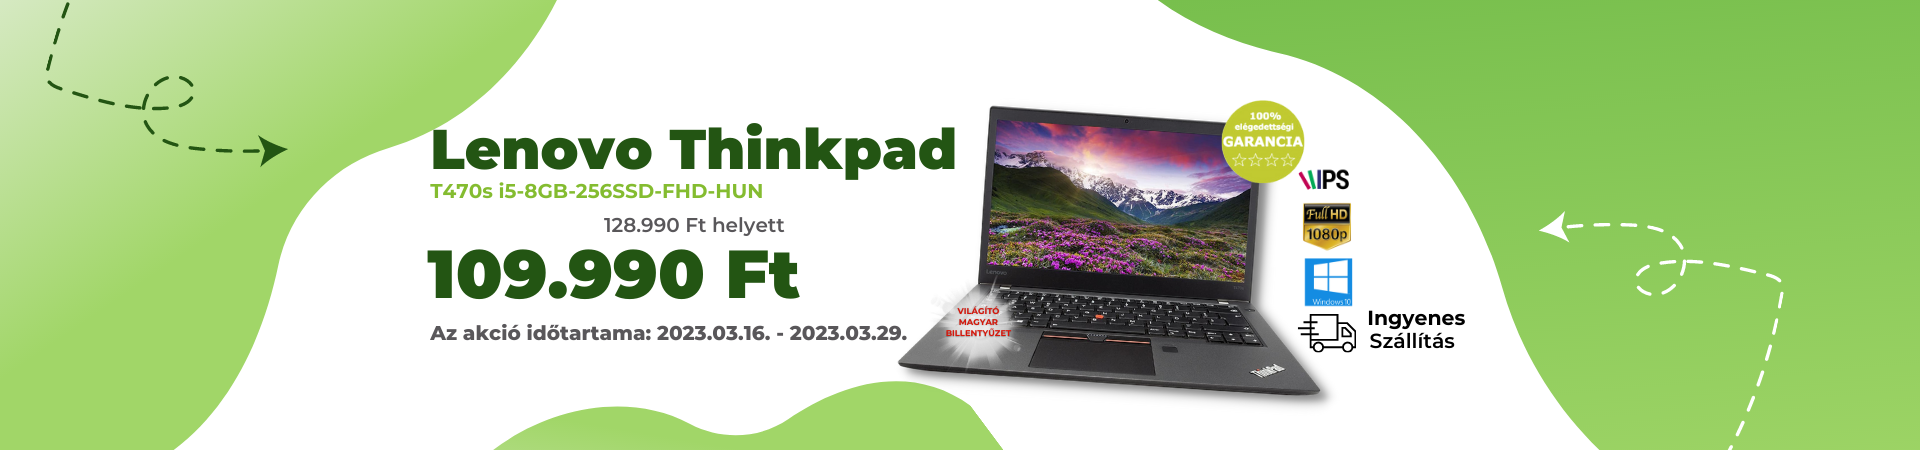 Lenovo Thinkpad T470s felújított laptop garanciával i5-8GB-256SSD-FHD-HUN